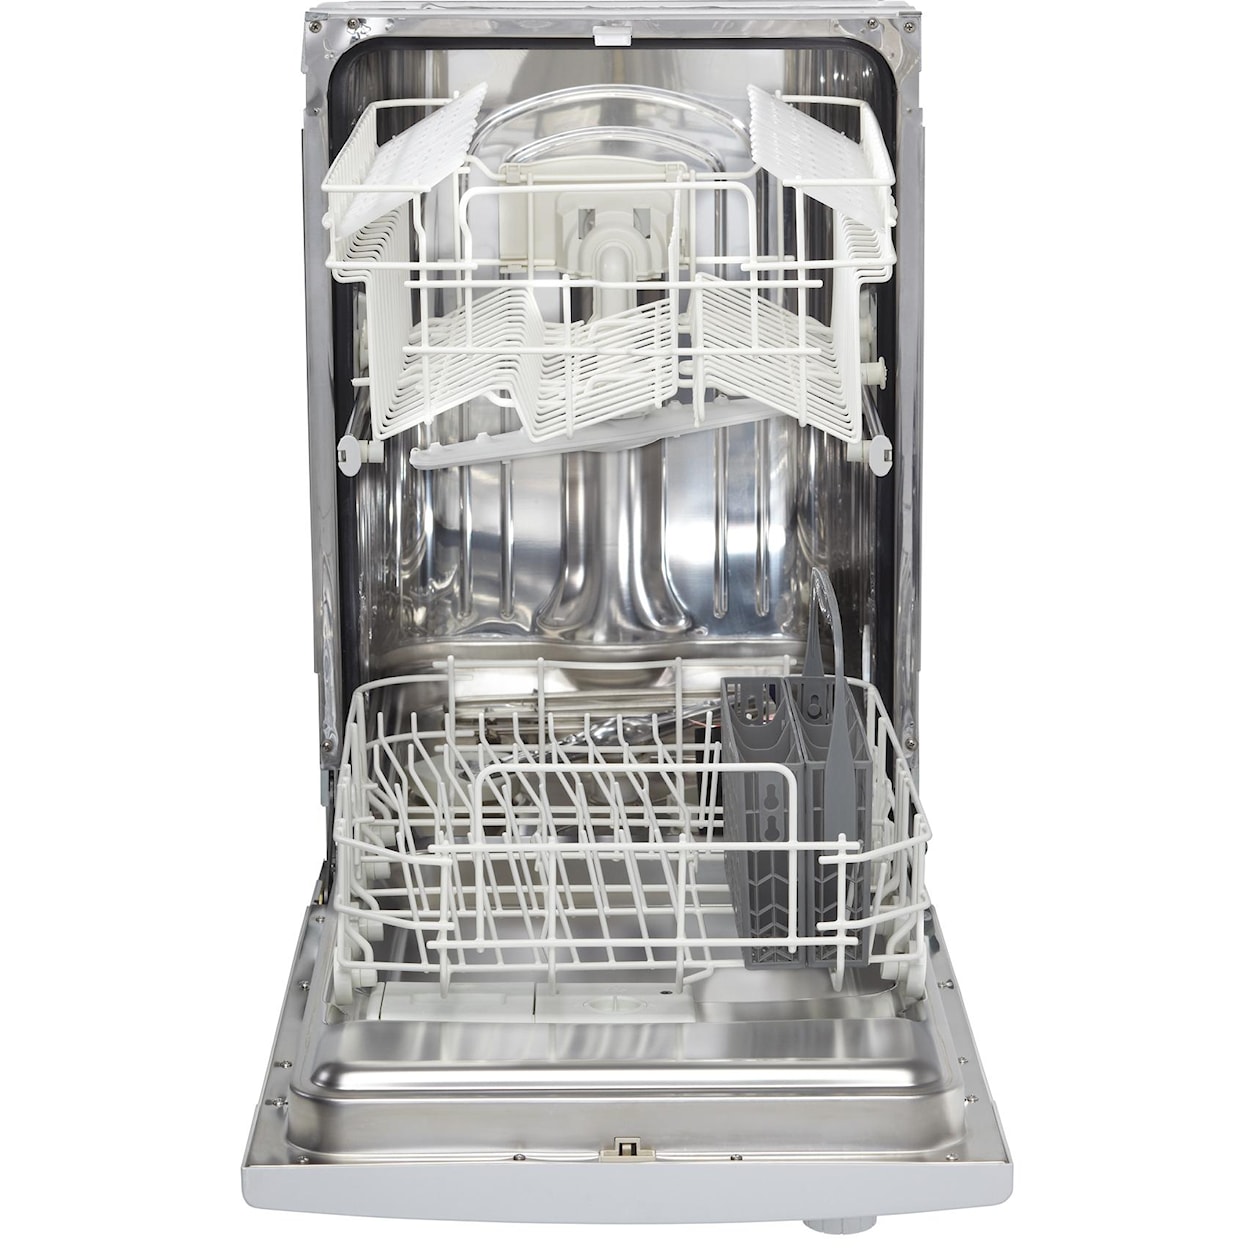 Danby Dishwashers 18" Built-In Dishwasher